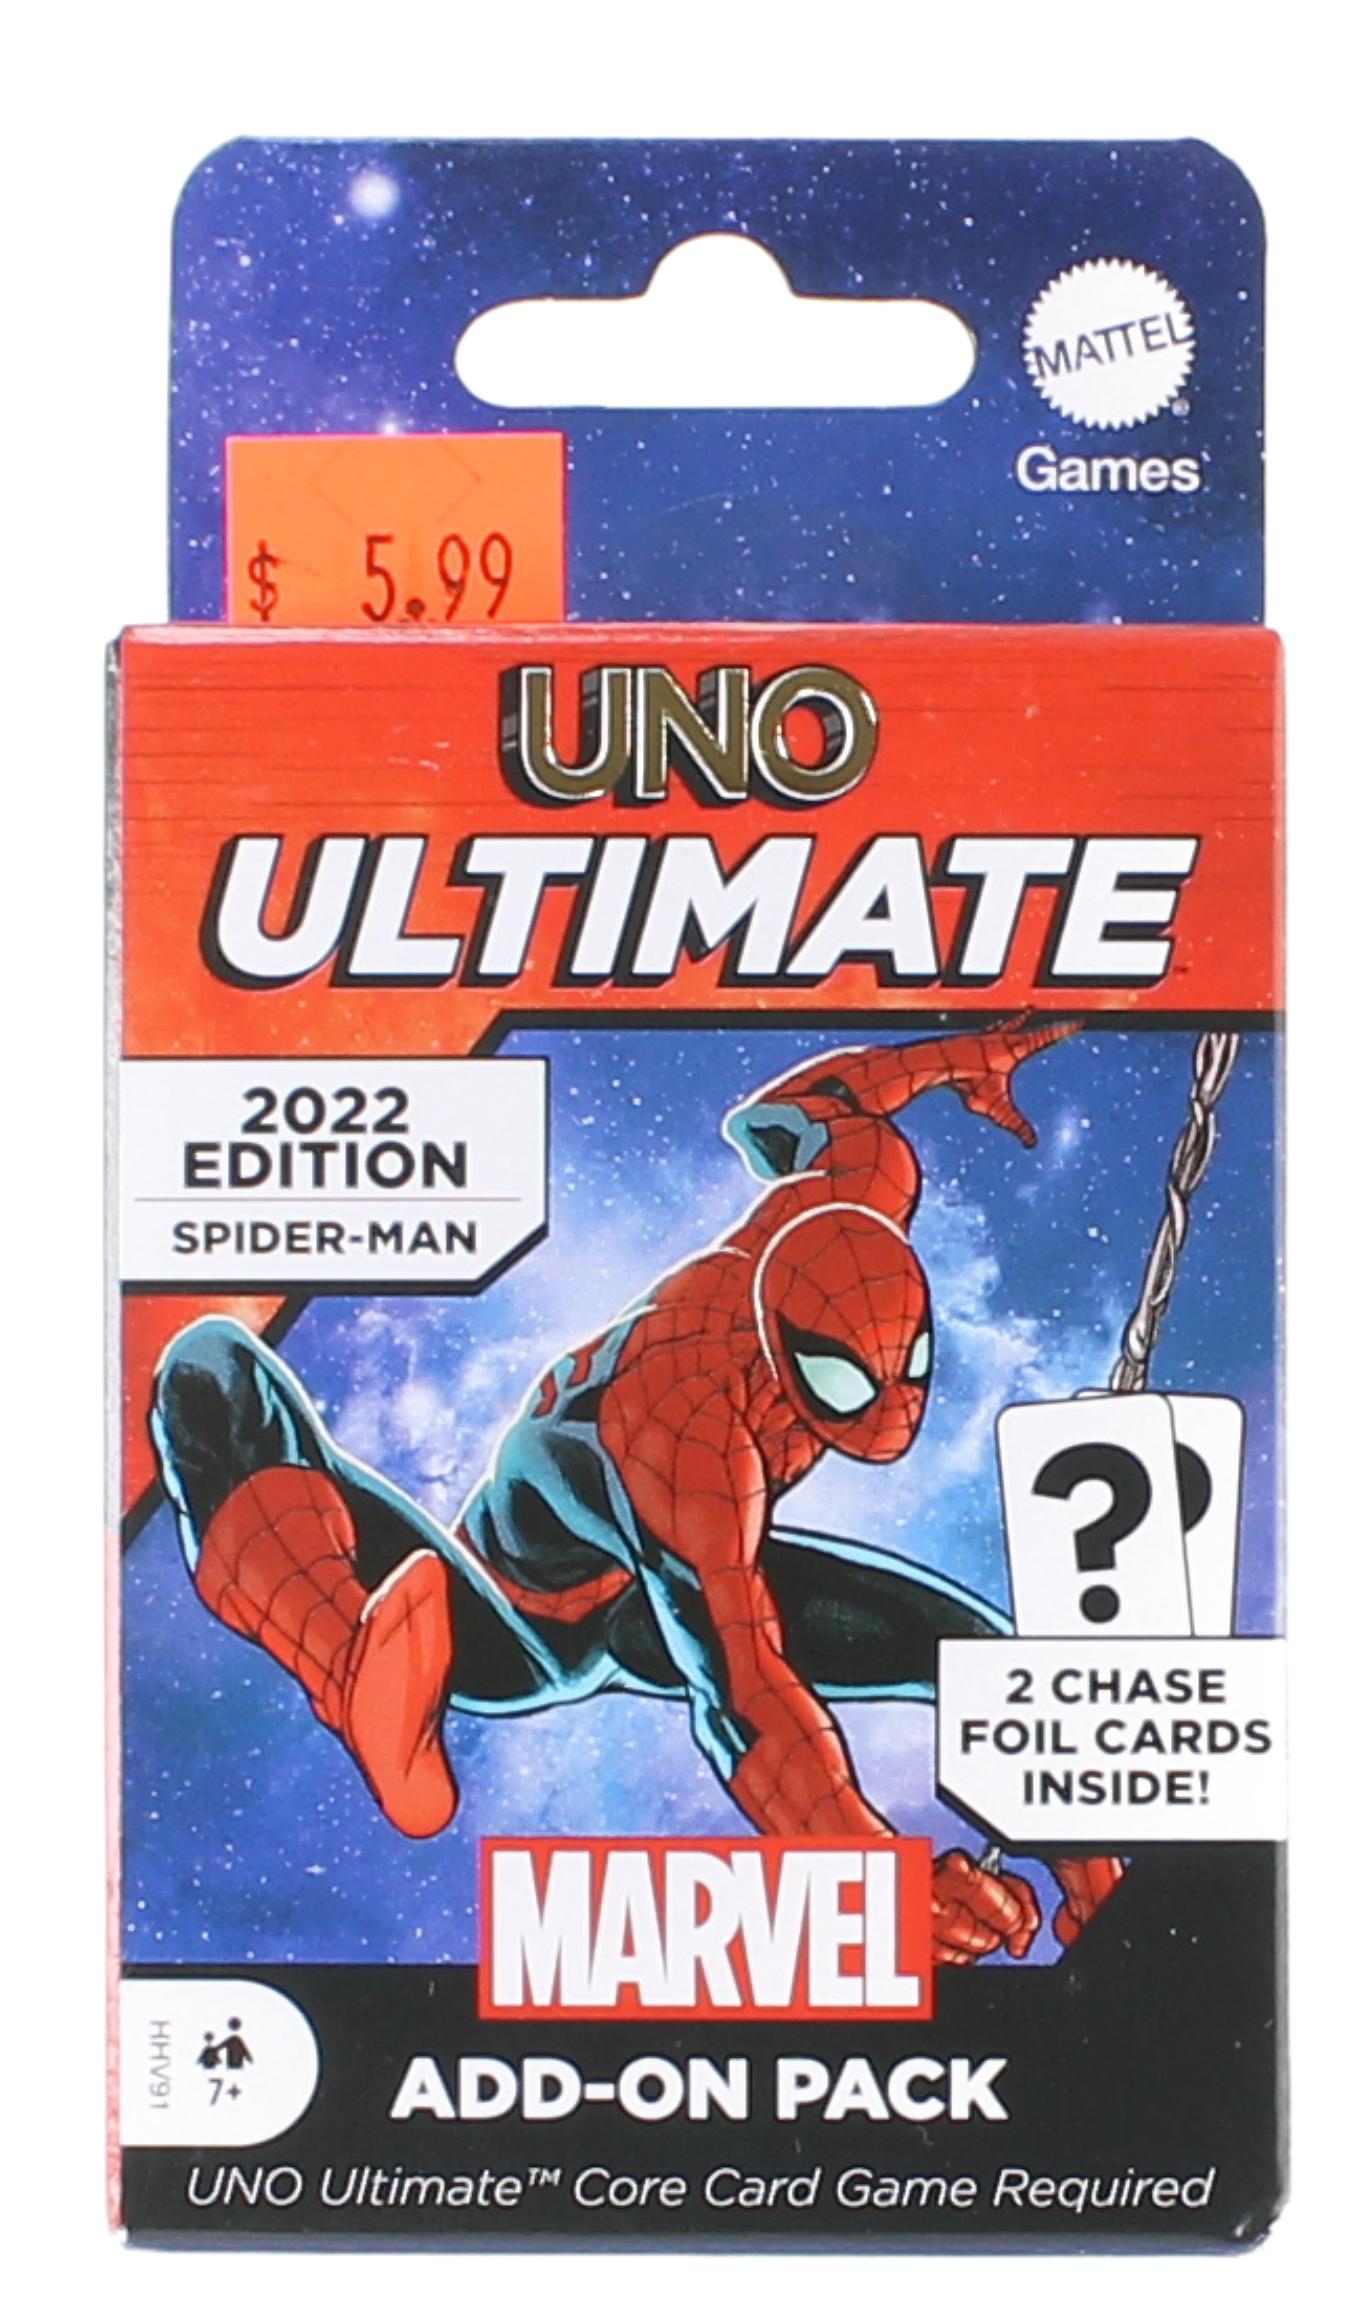 UNO® Ultimate Edition